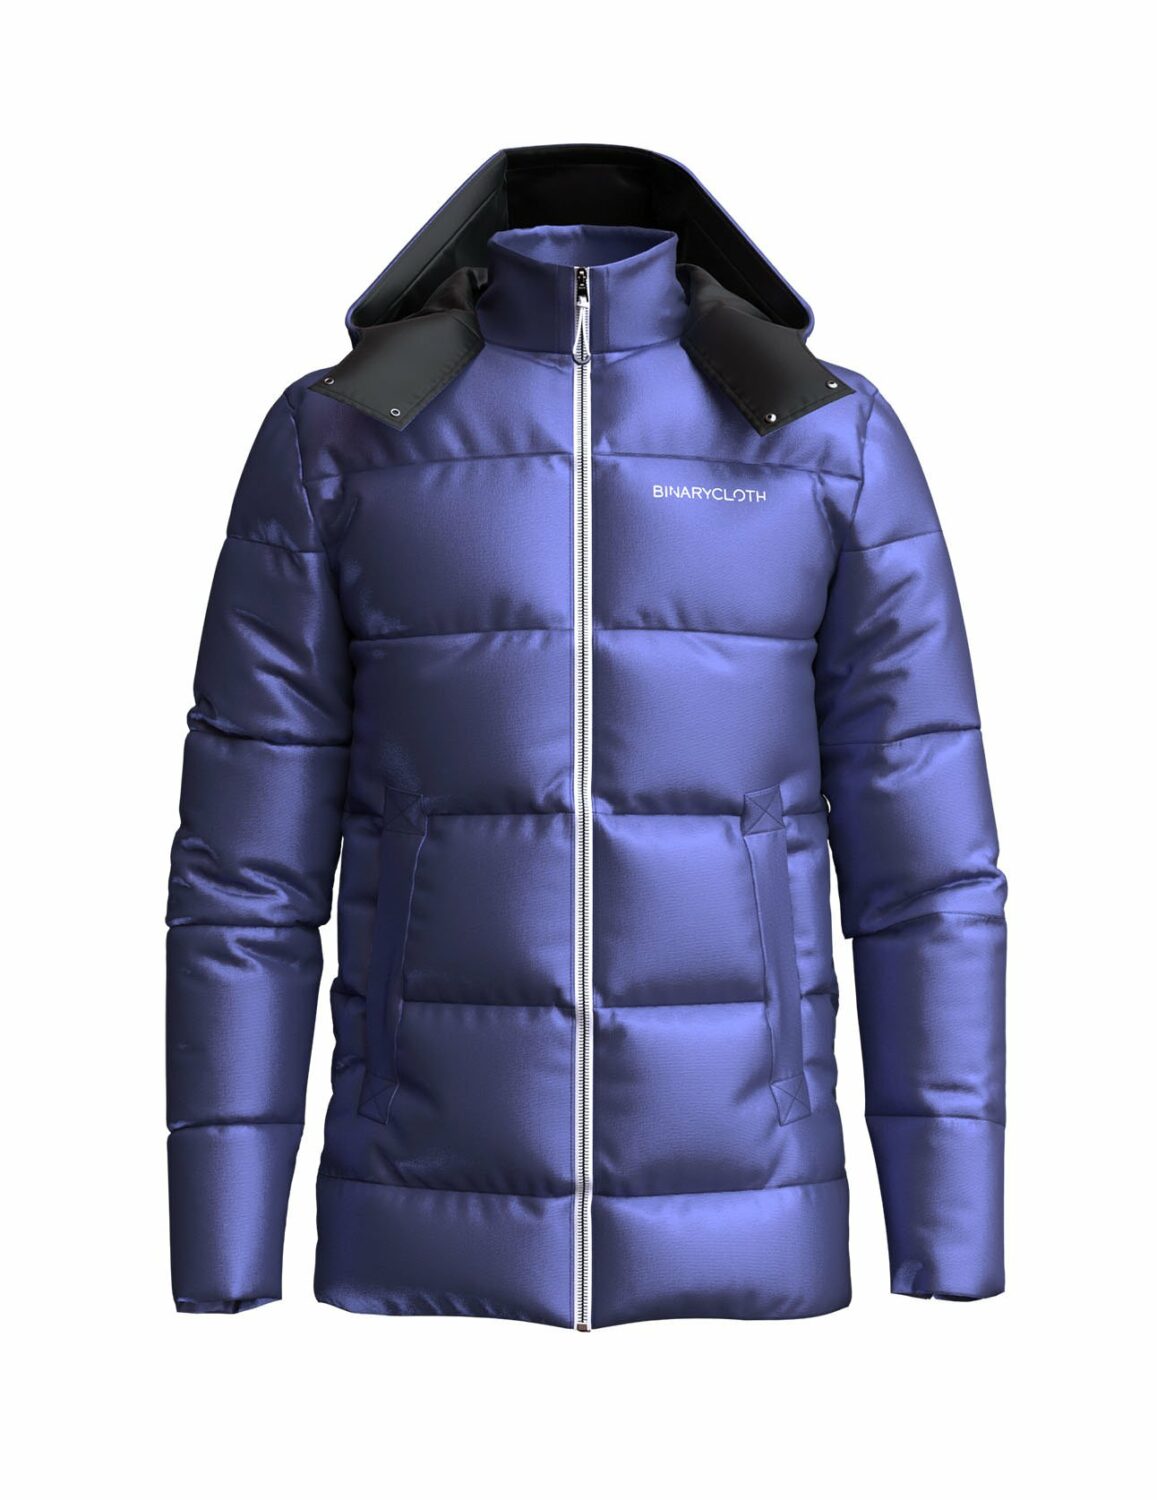 Windproof puff jacket